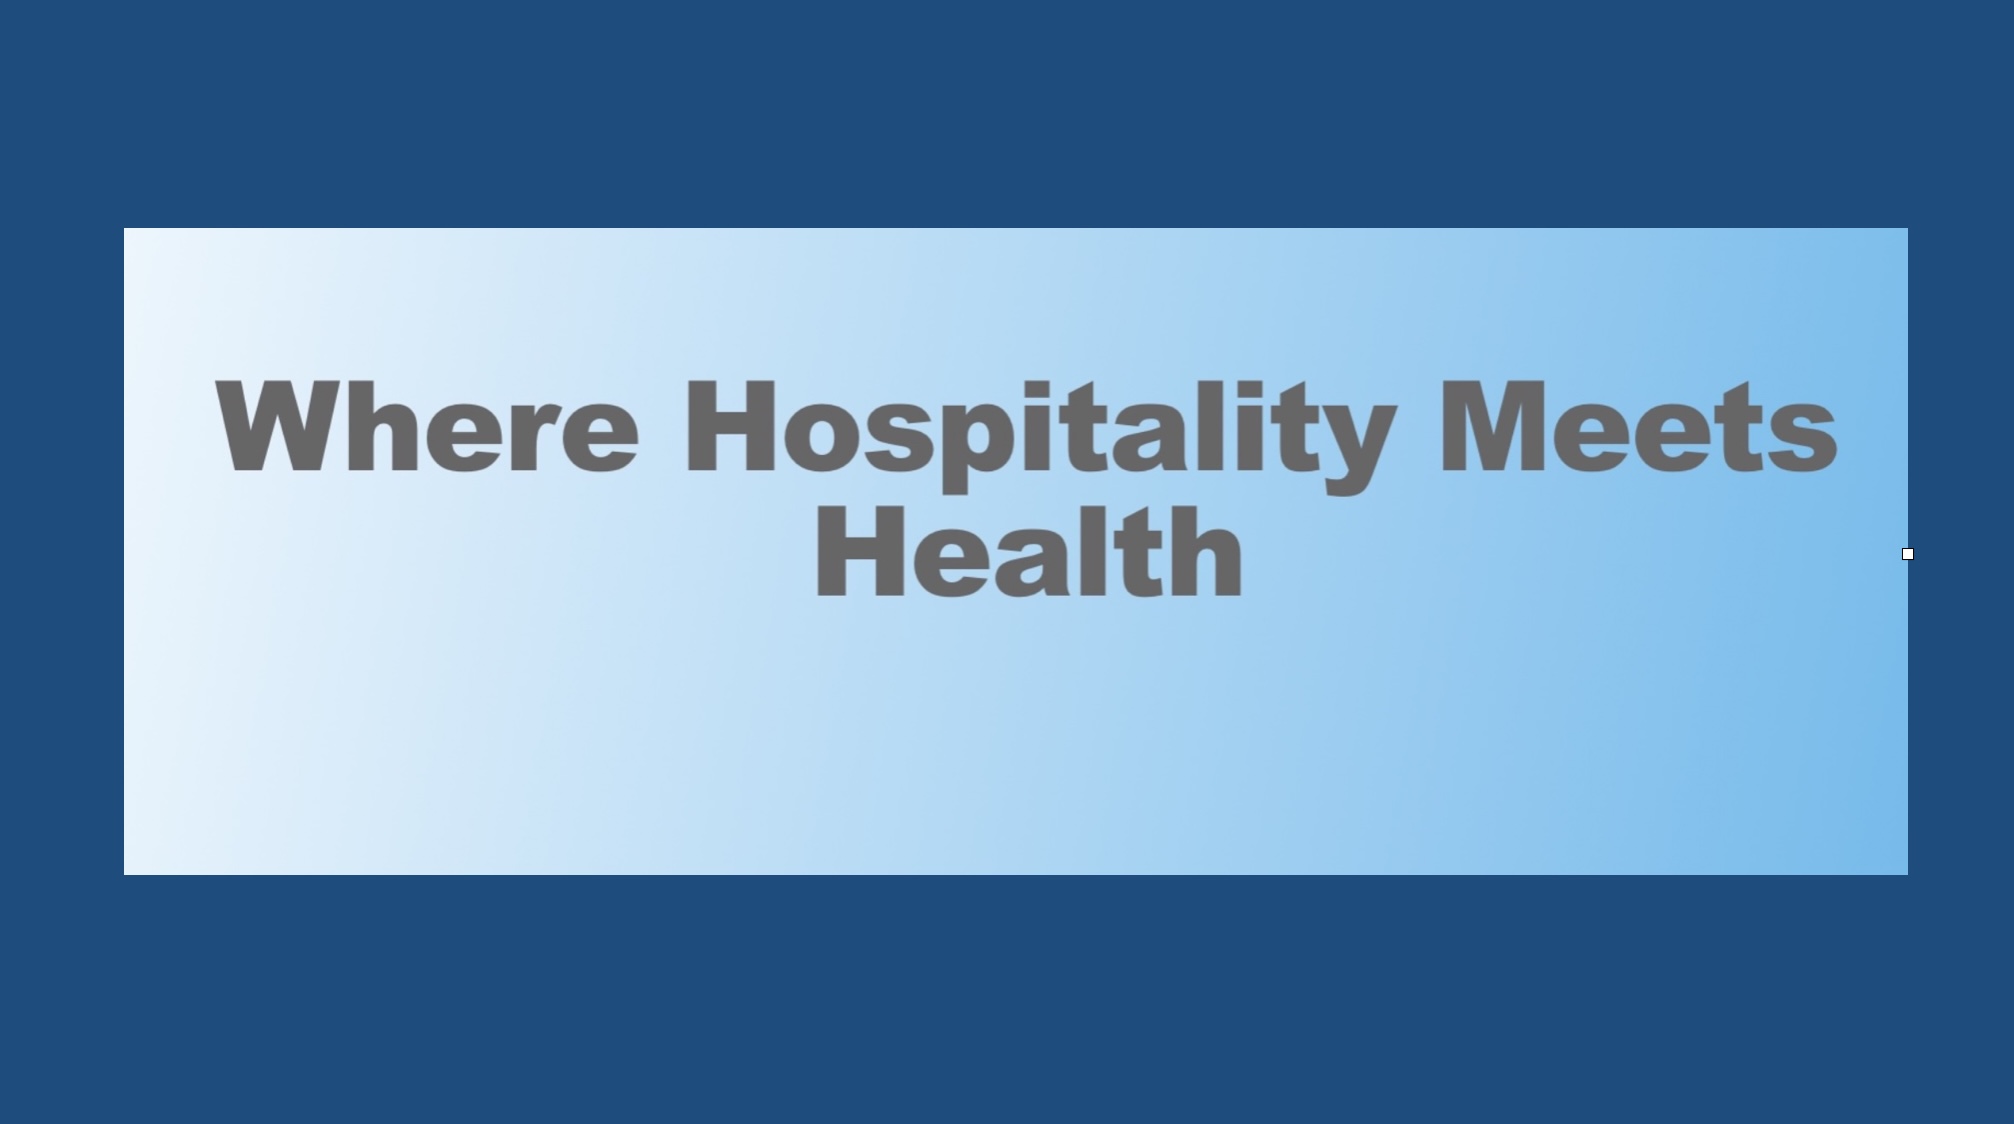 Where hospitality meets health text